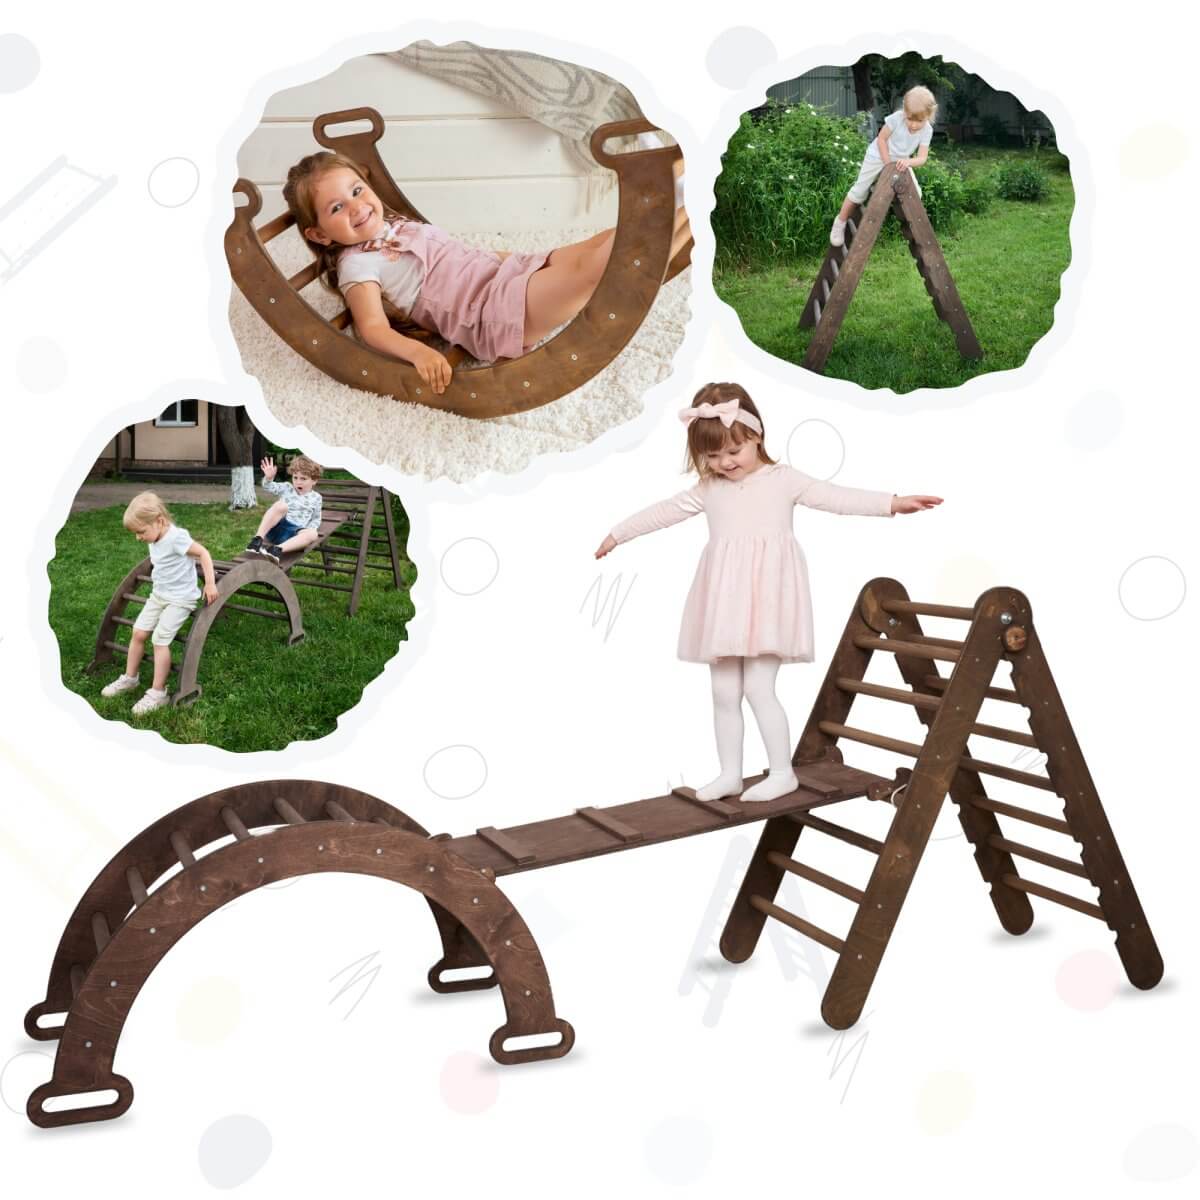 3in1 Montessori climbing set: climbing triangle + wooden arch + slide board, brown